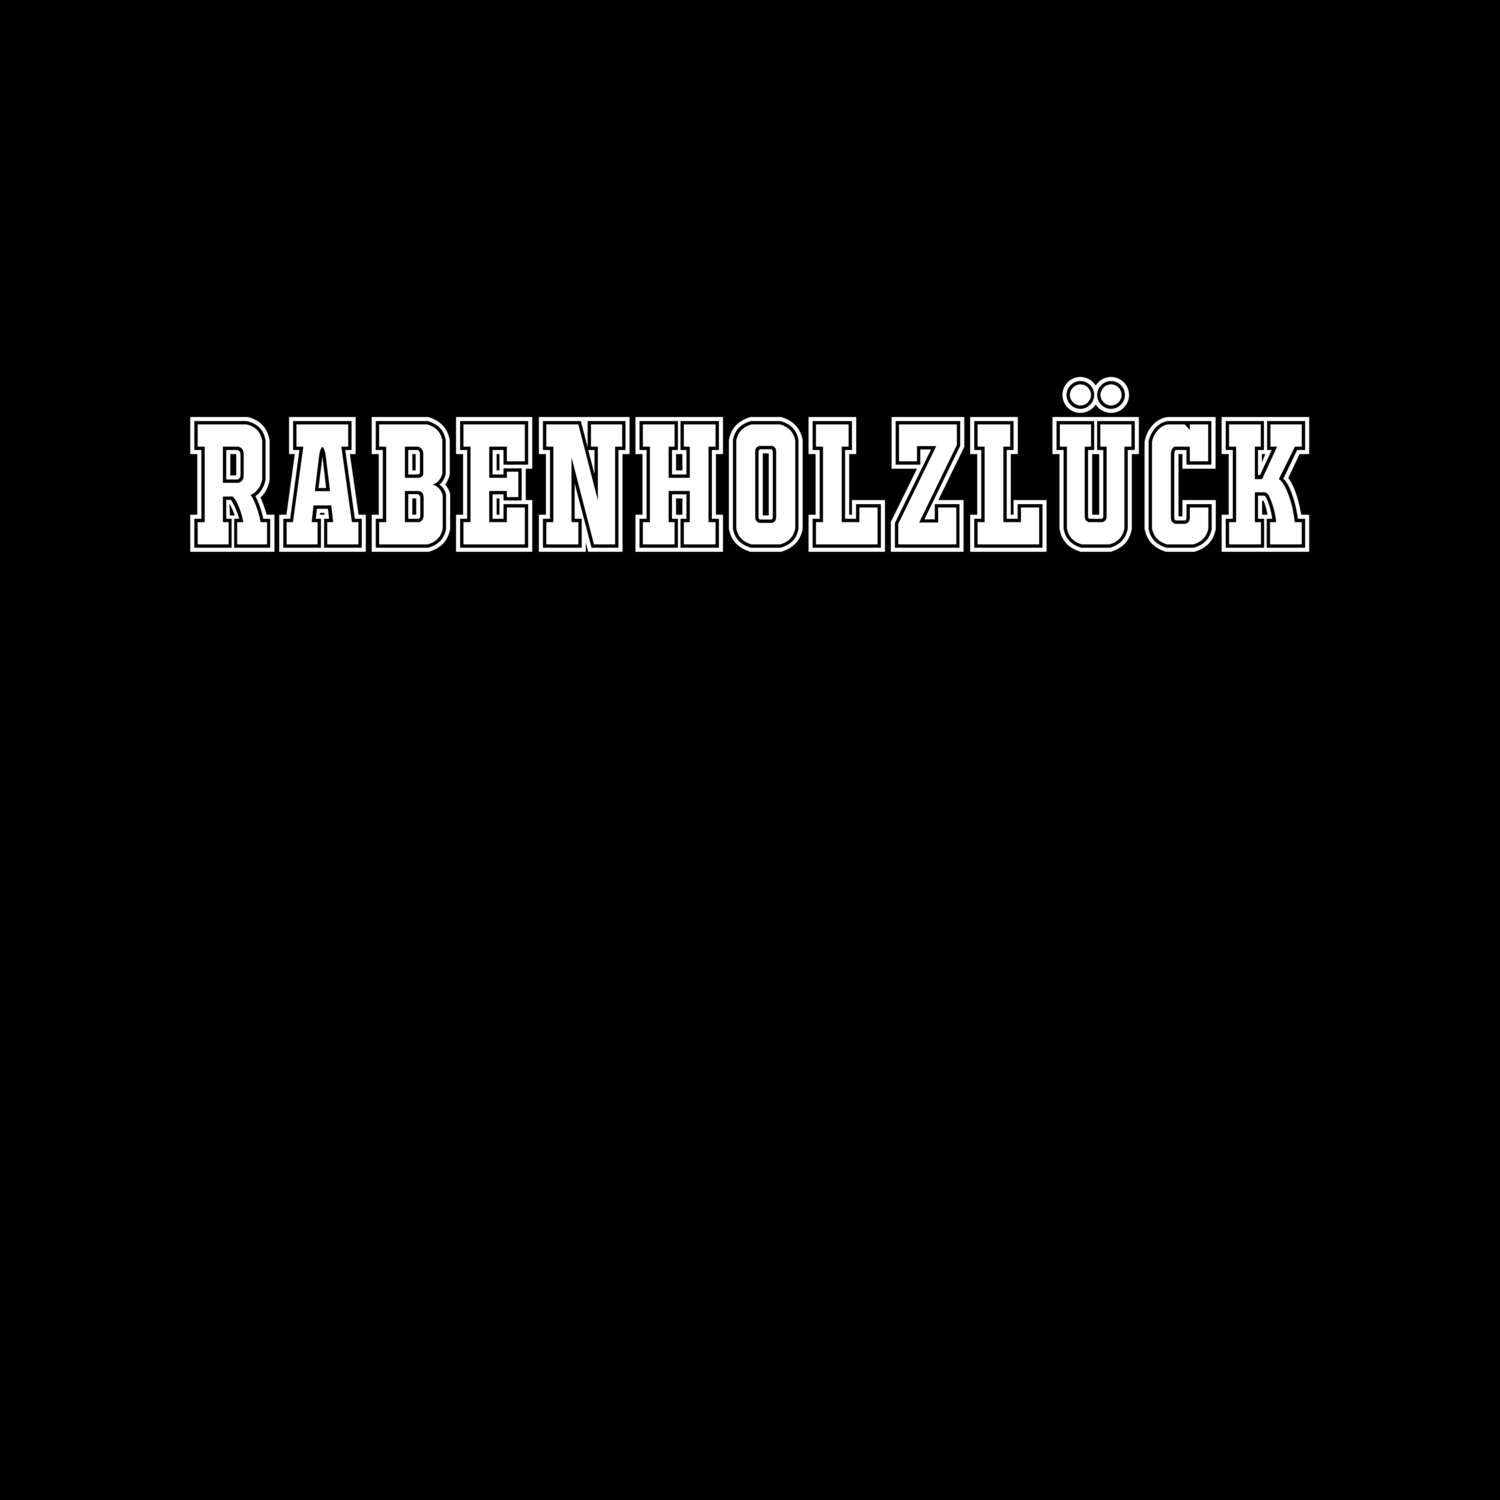 Rabenholzlück T-Shirt »Classic«